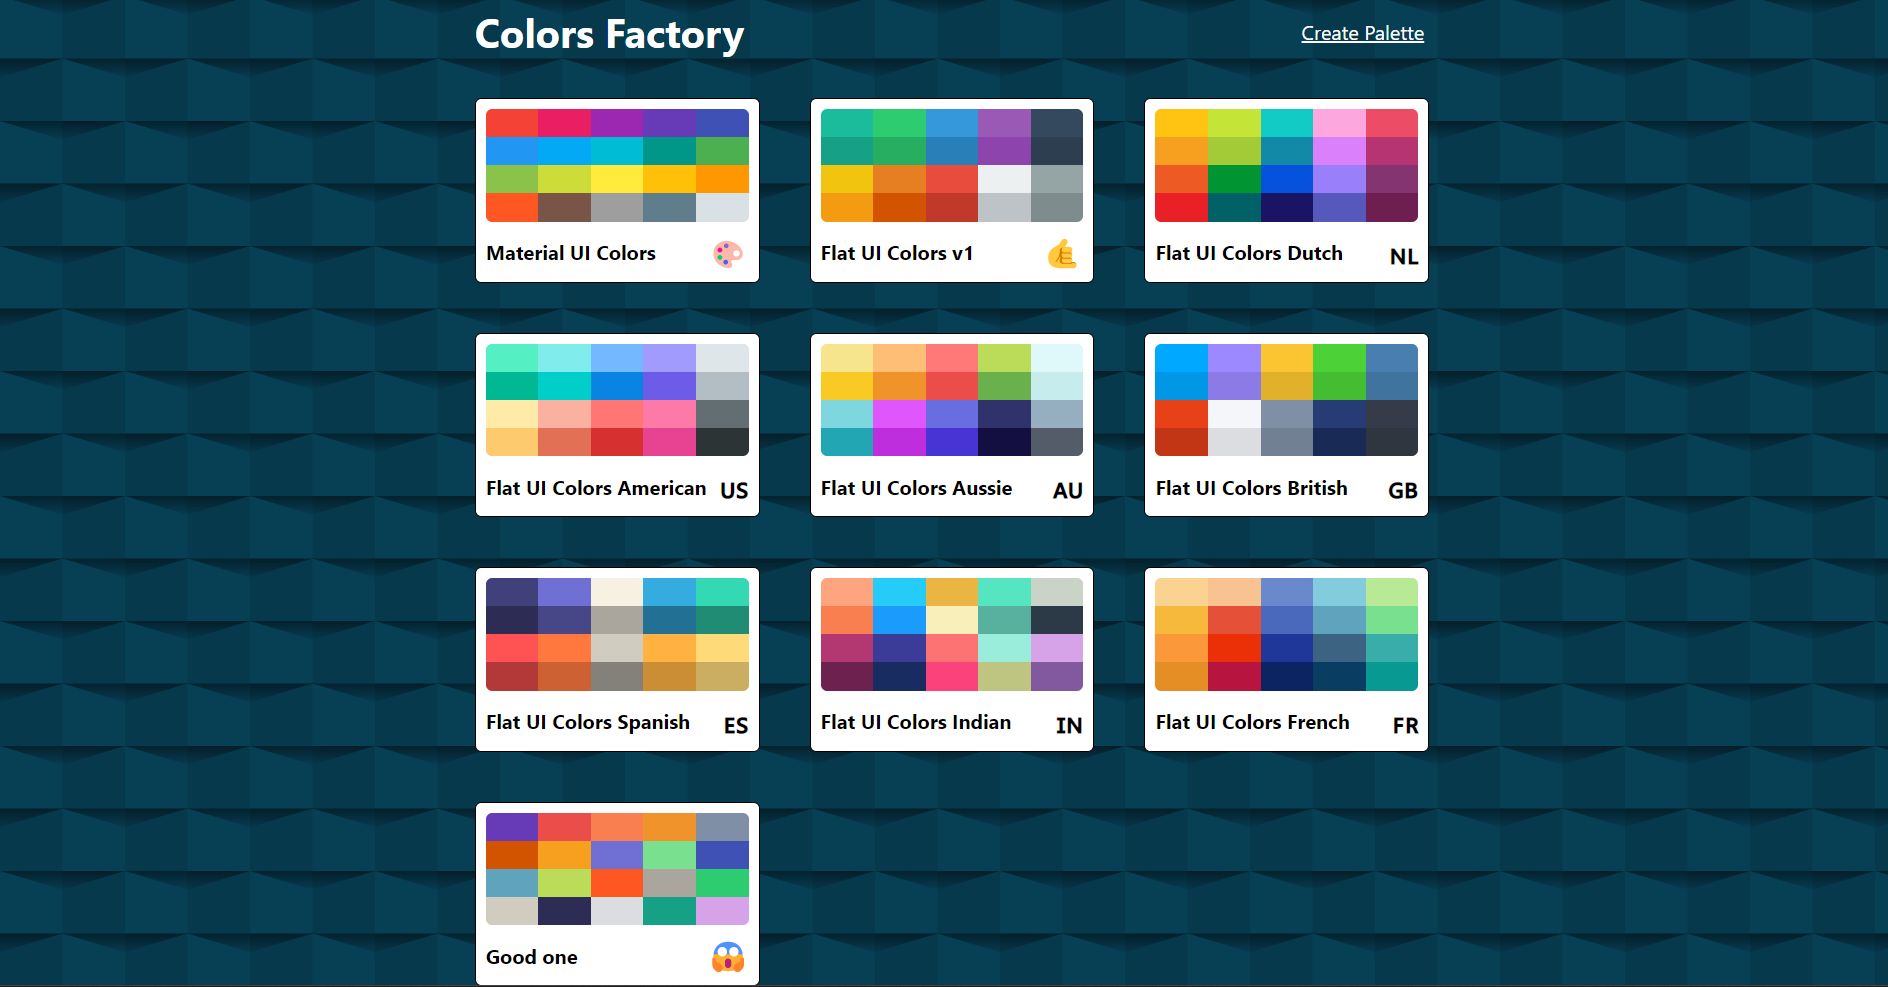 shivam damre project4: Color-Factory